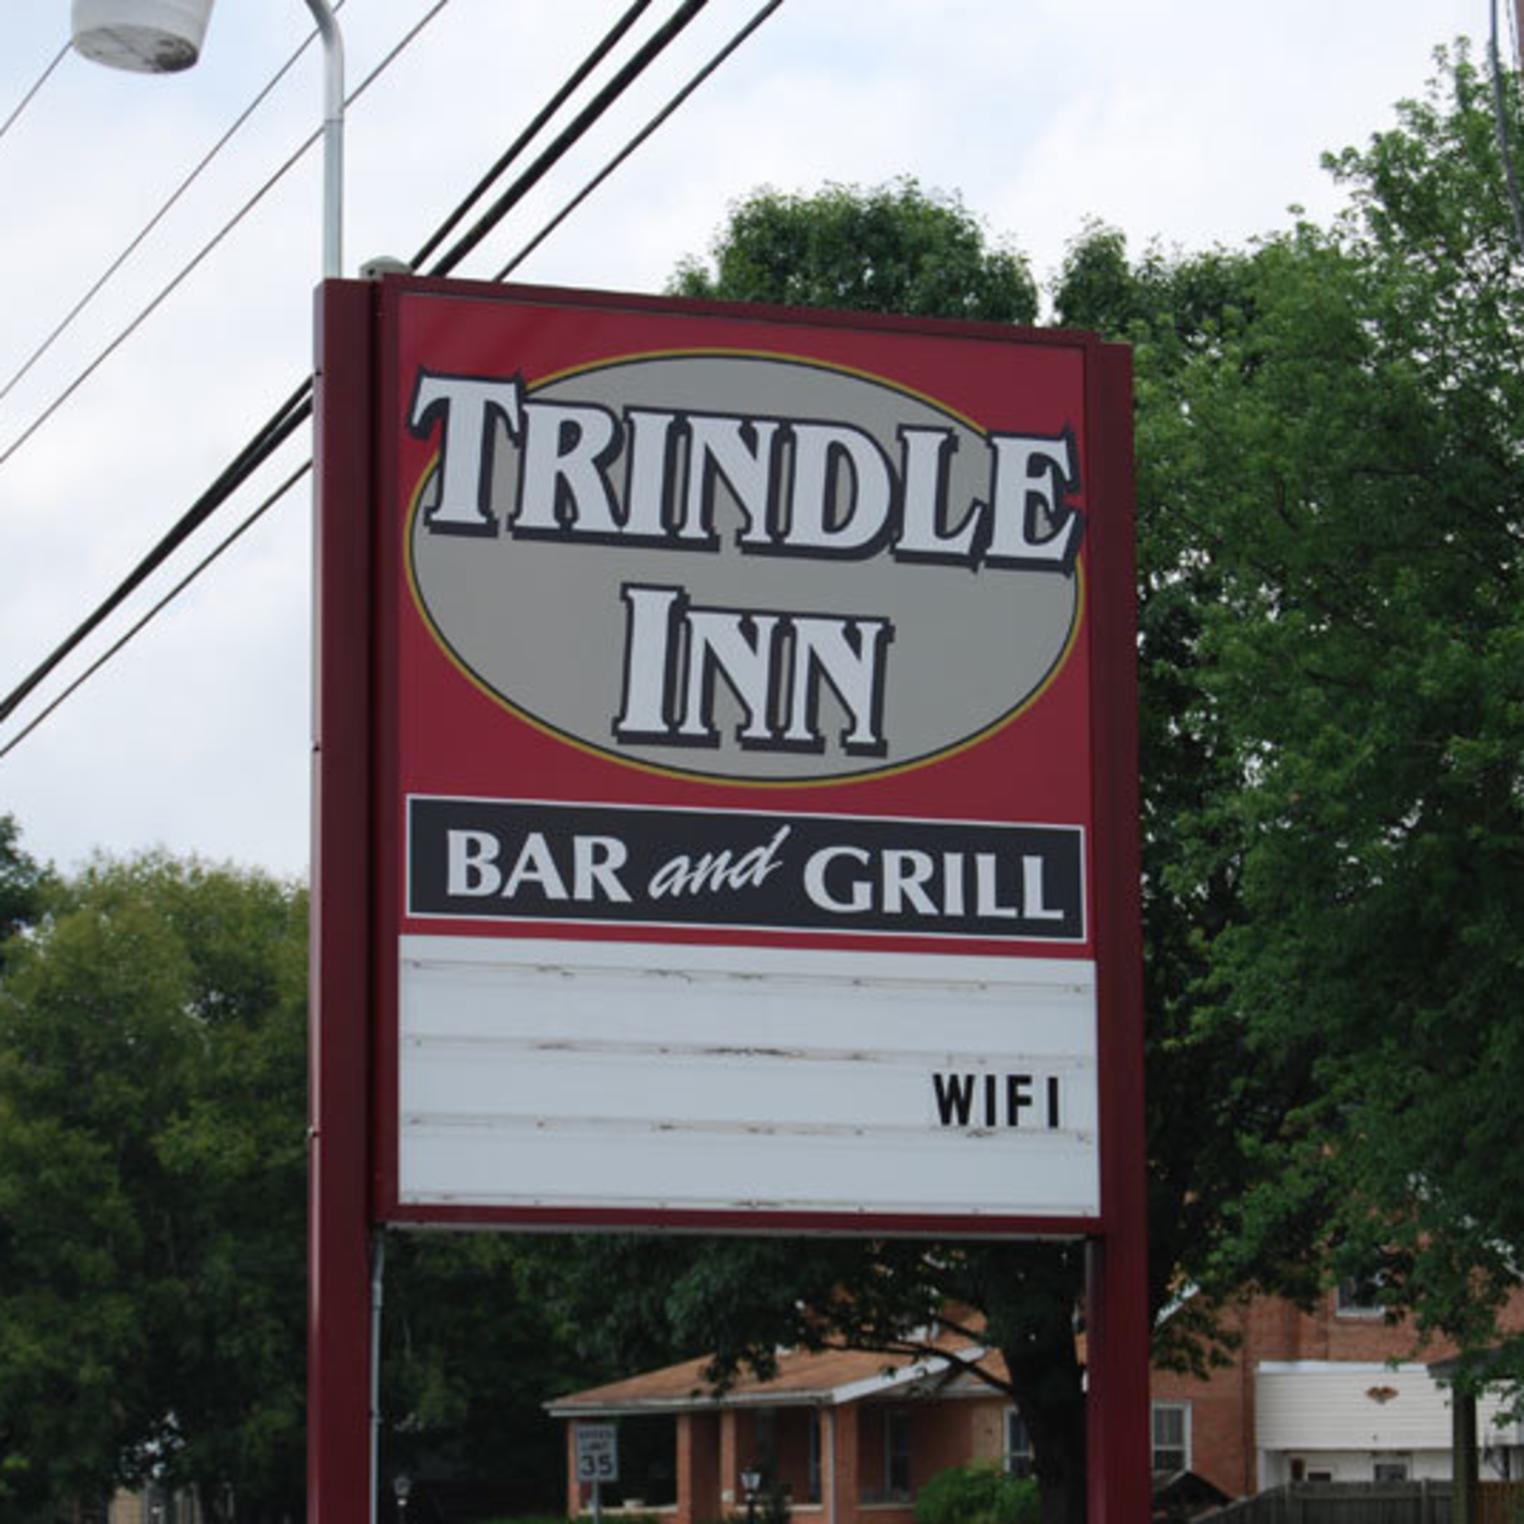 Trindle Inn